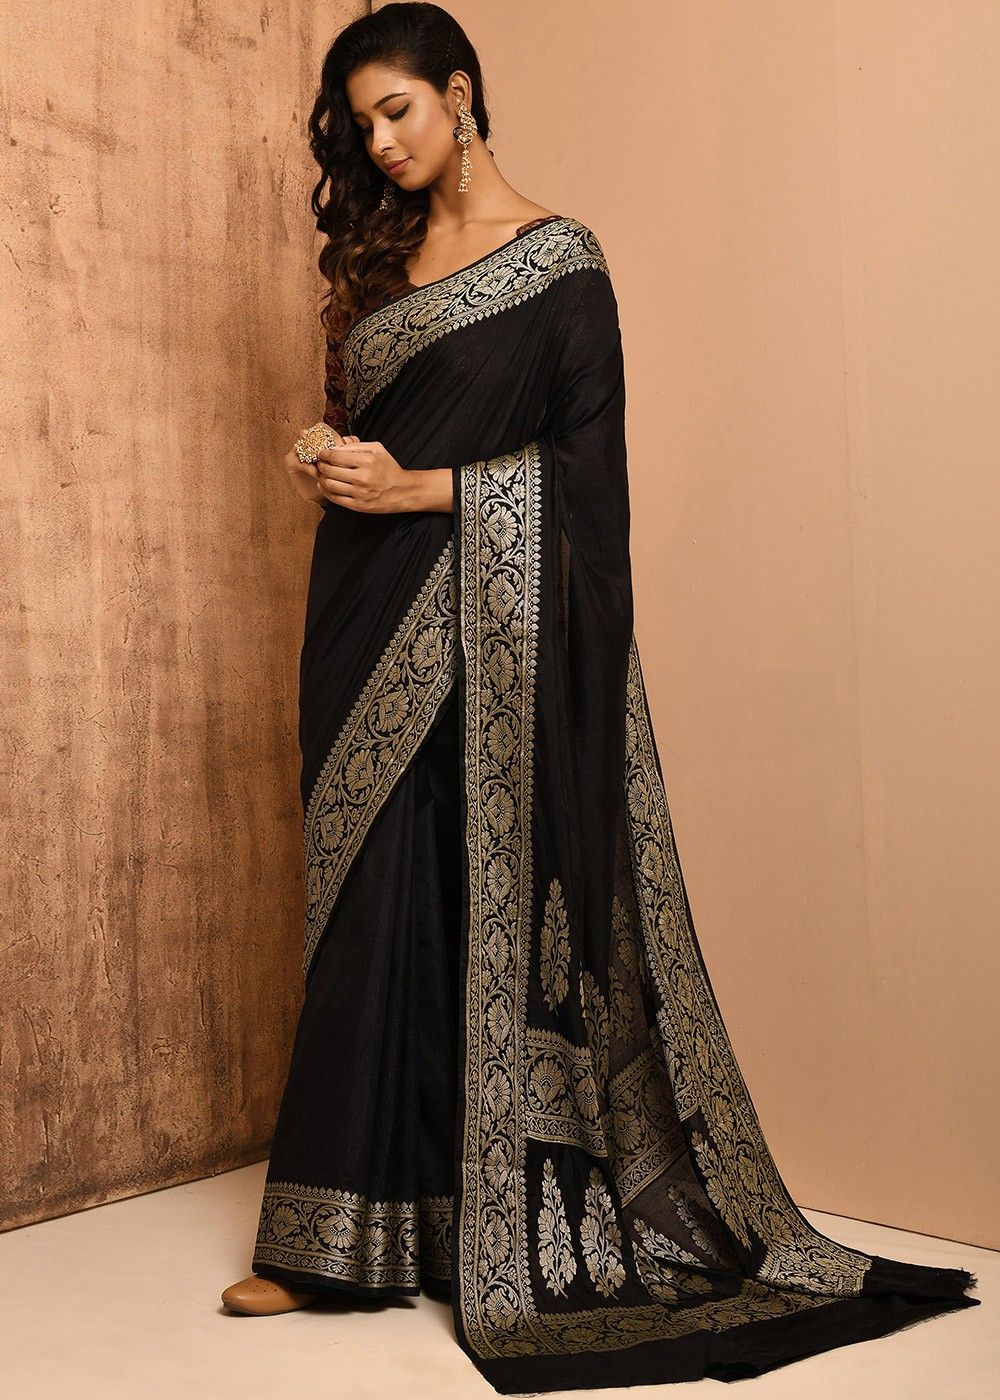 Buy Black Color Banarasi Sarees Online at Indian Cloth Store